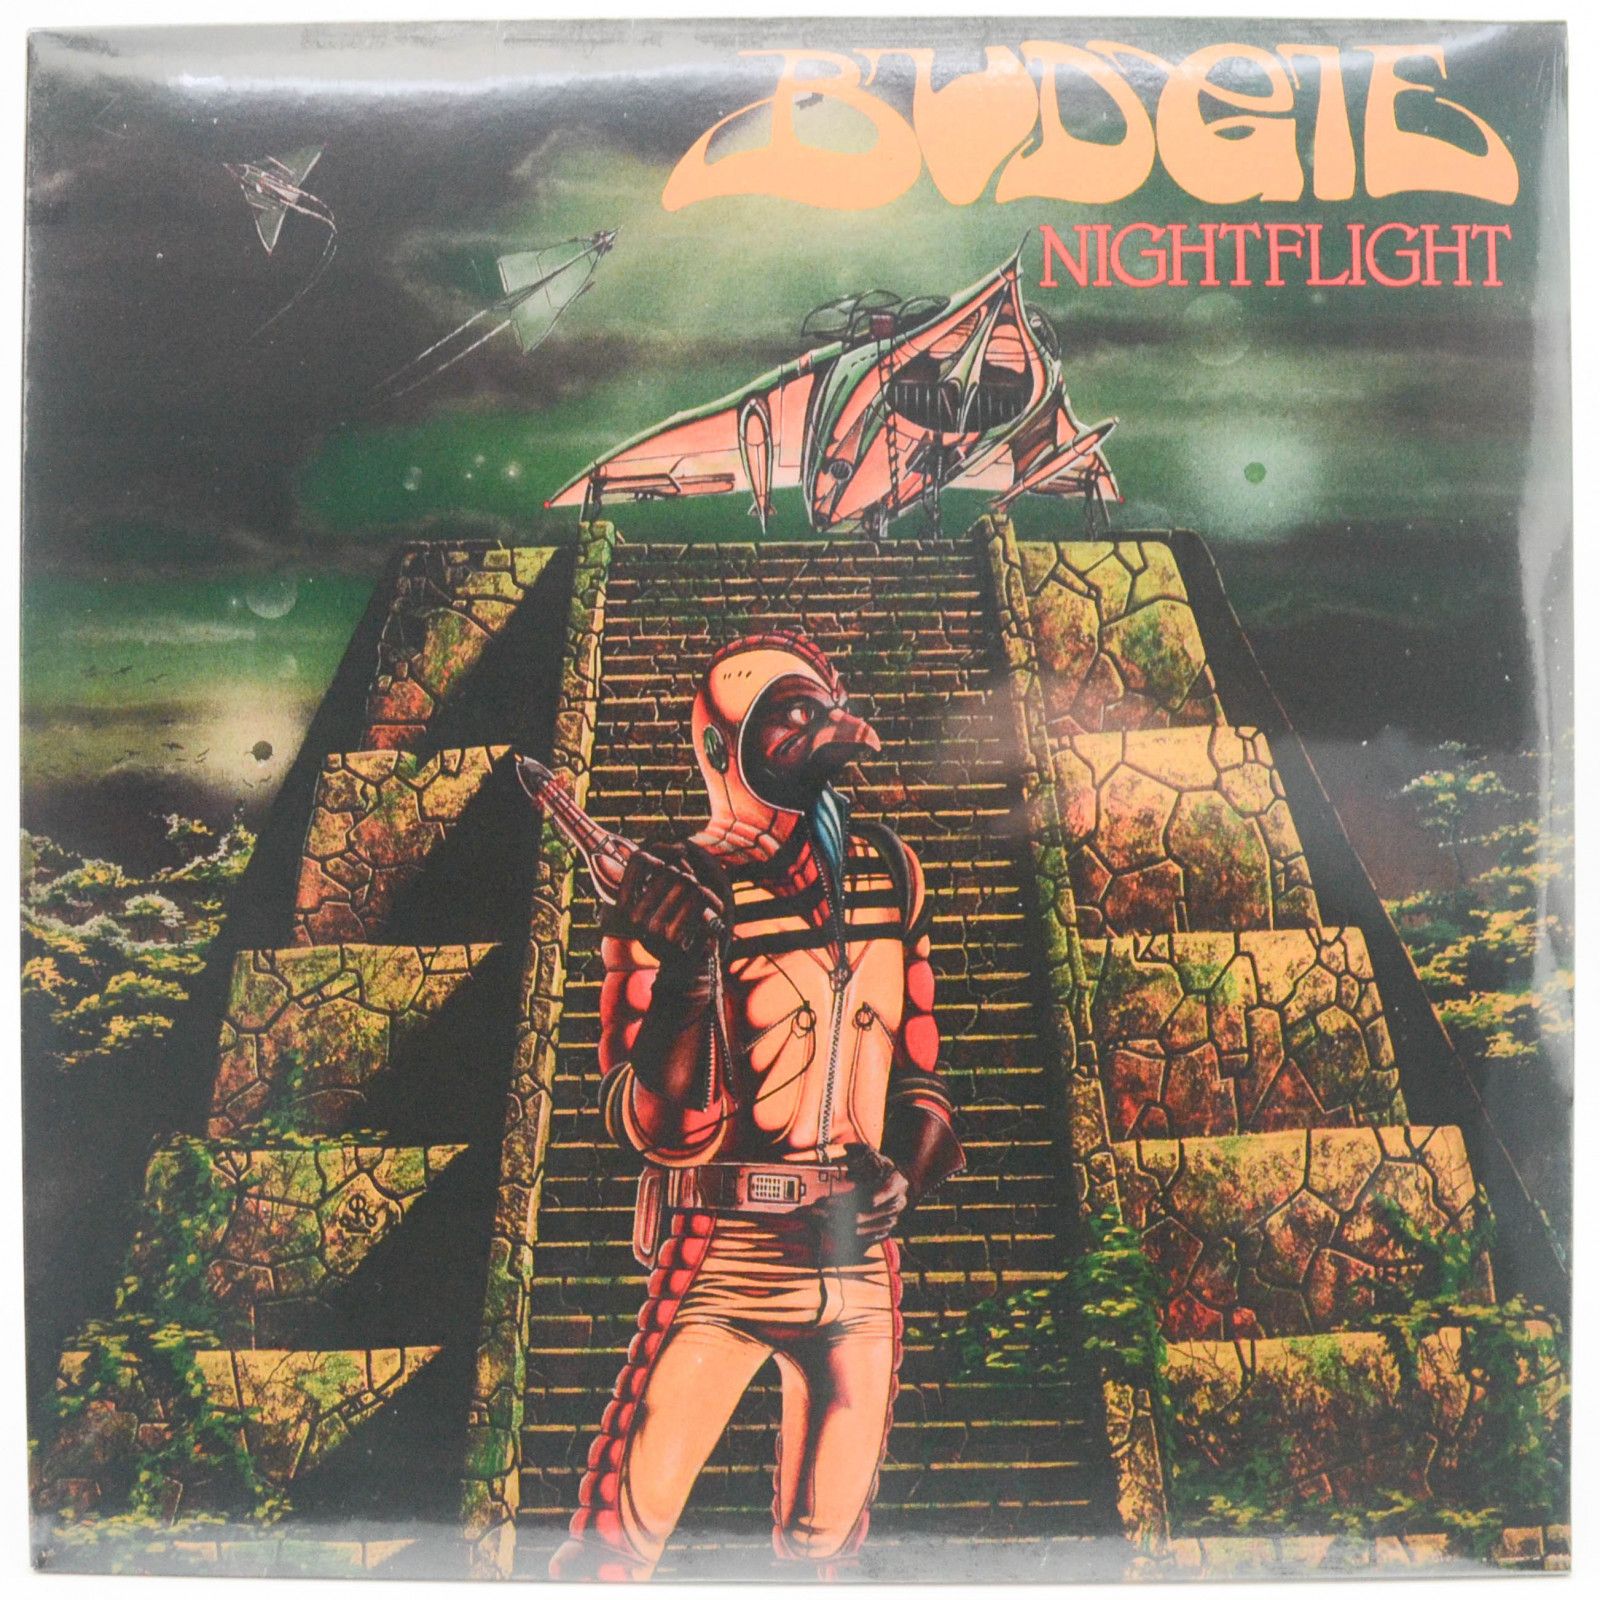 Budgie — Nightflight (UK), 1981